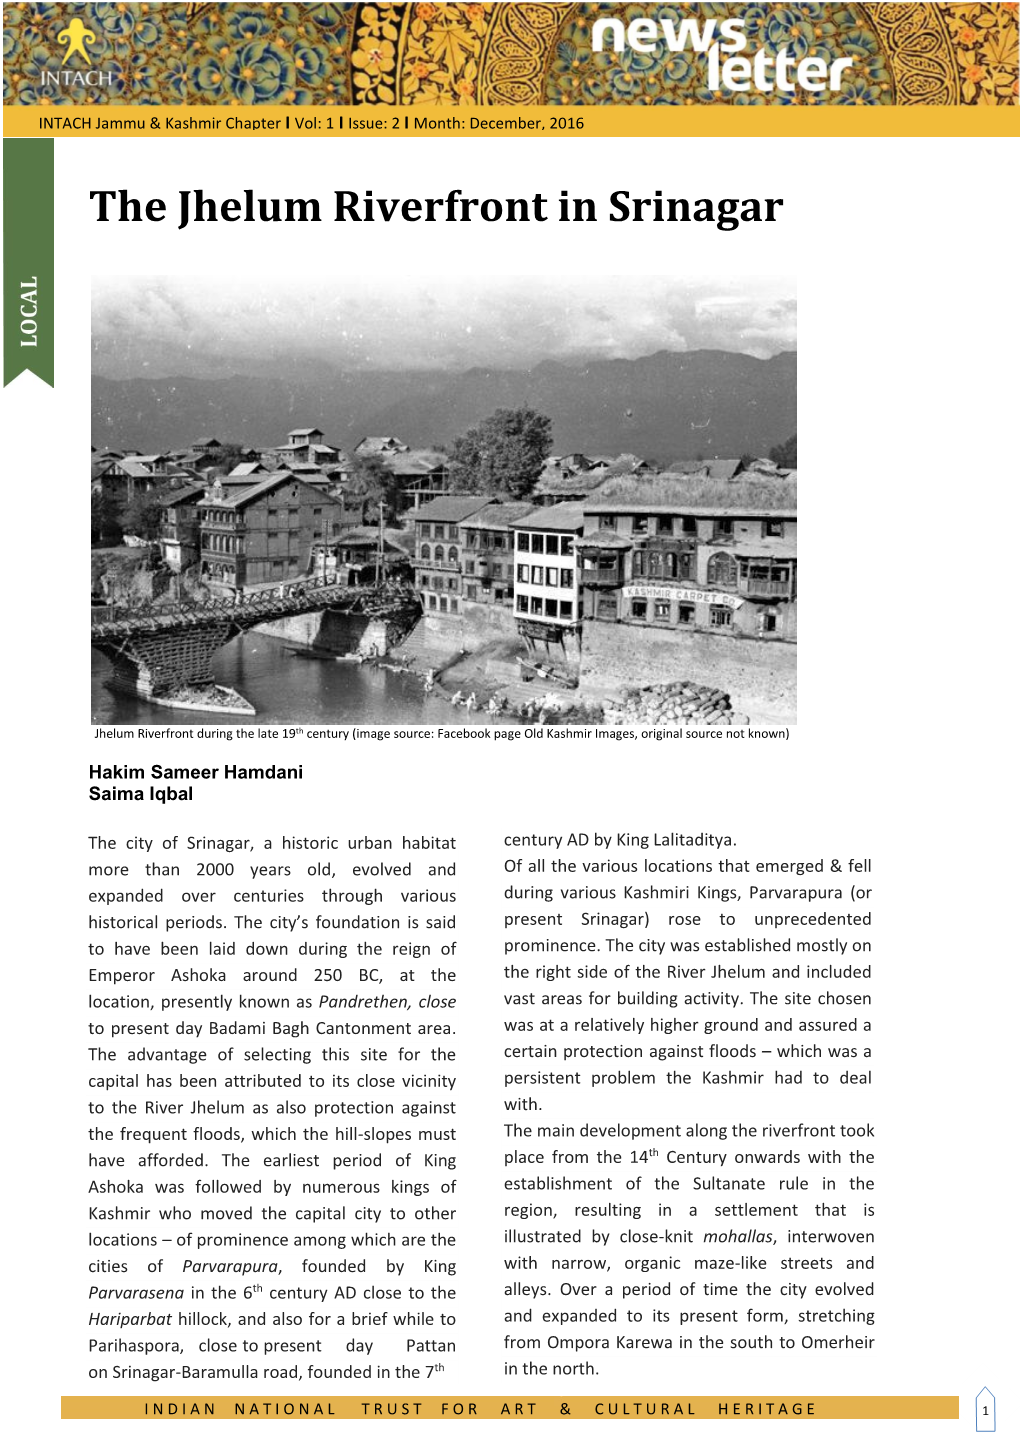 The Jhelum Riverfront in Srinagar